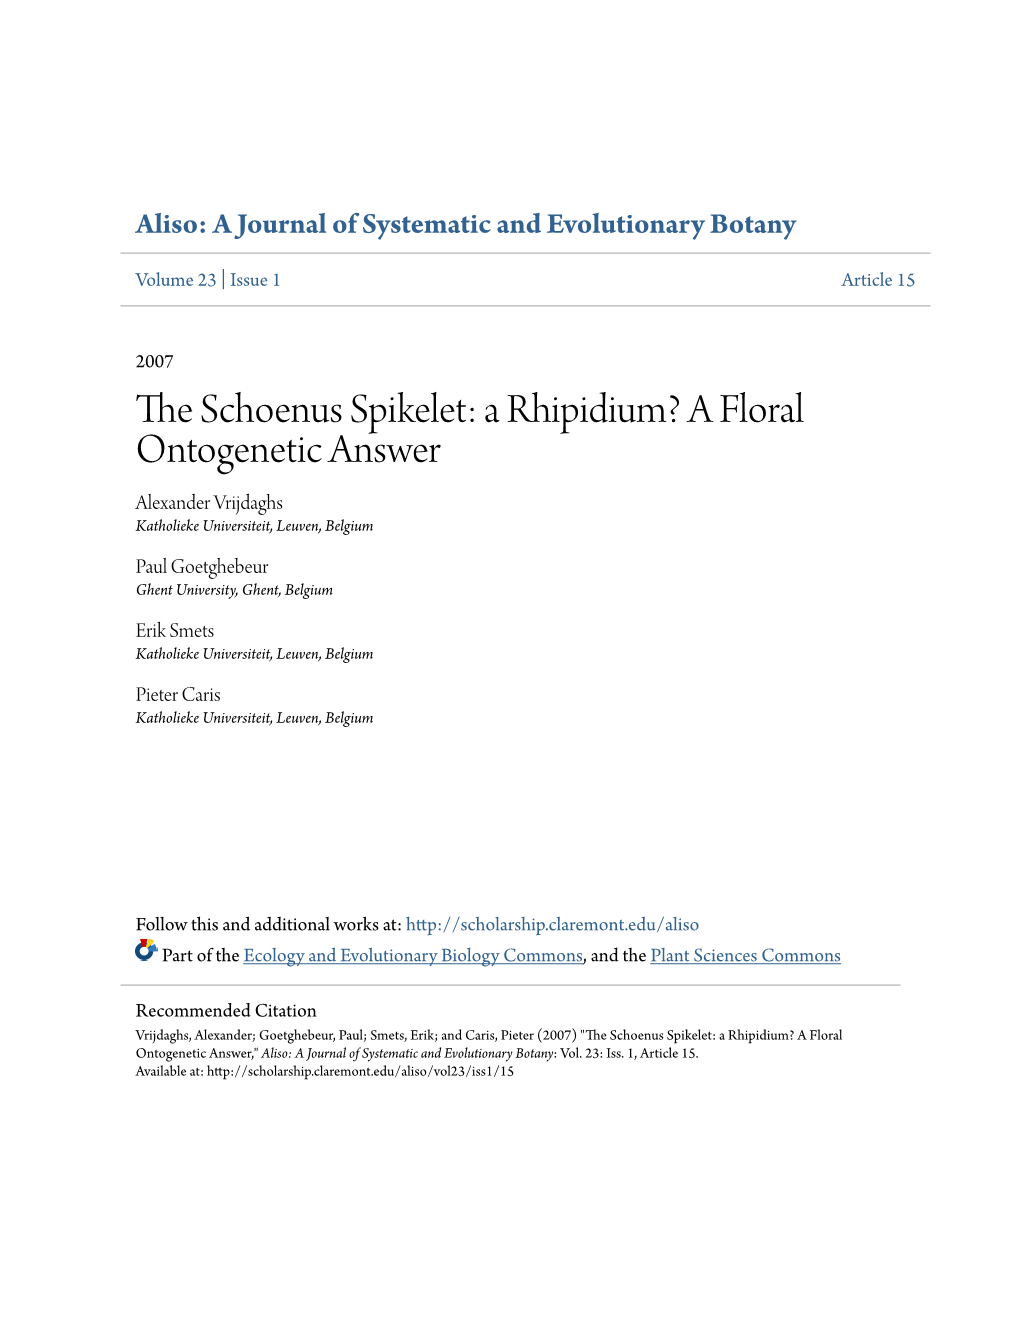 The Schoenus Spikelet: a Rhipidium? a Floral Ontogenetic Answer